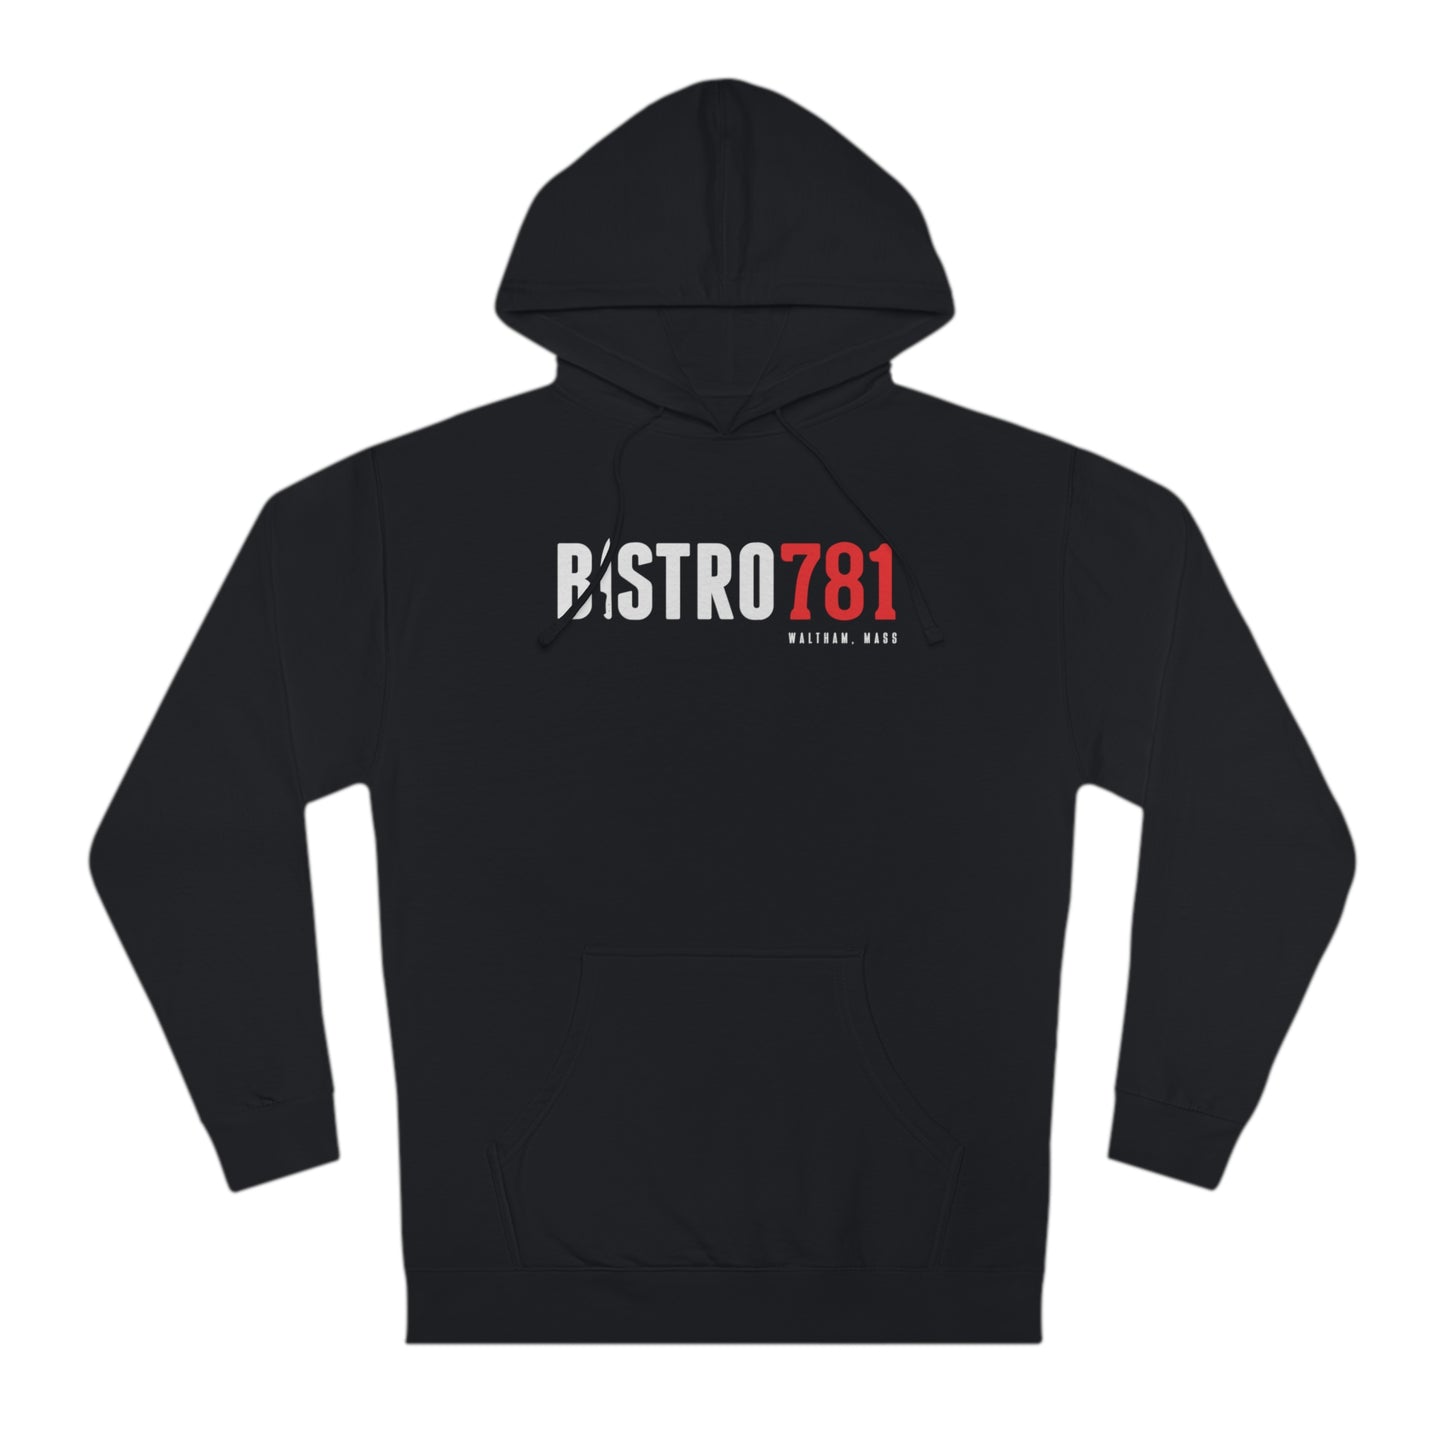 Bistro781 Unisex Hooded Sweatshirt